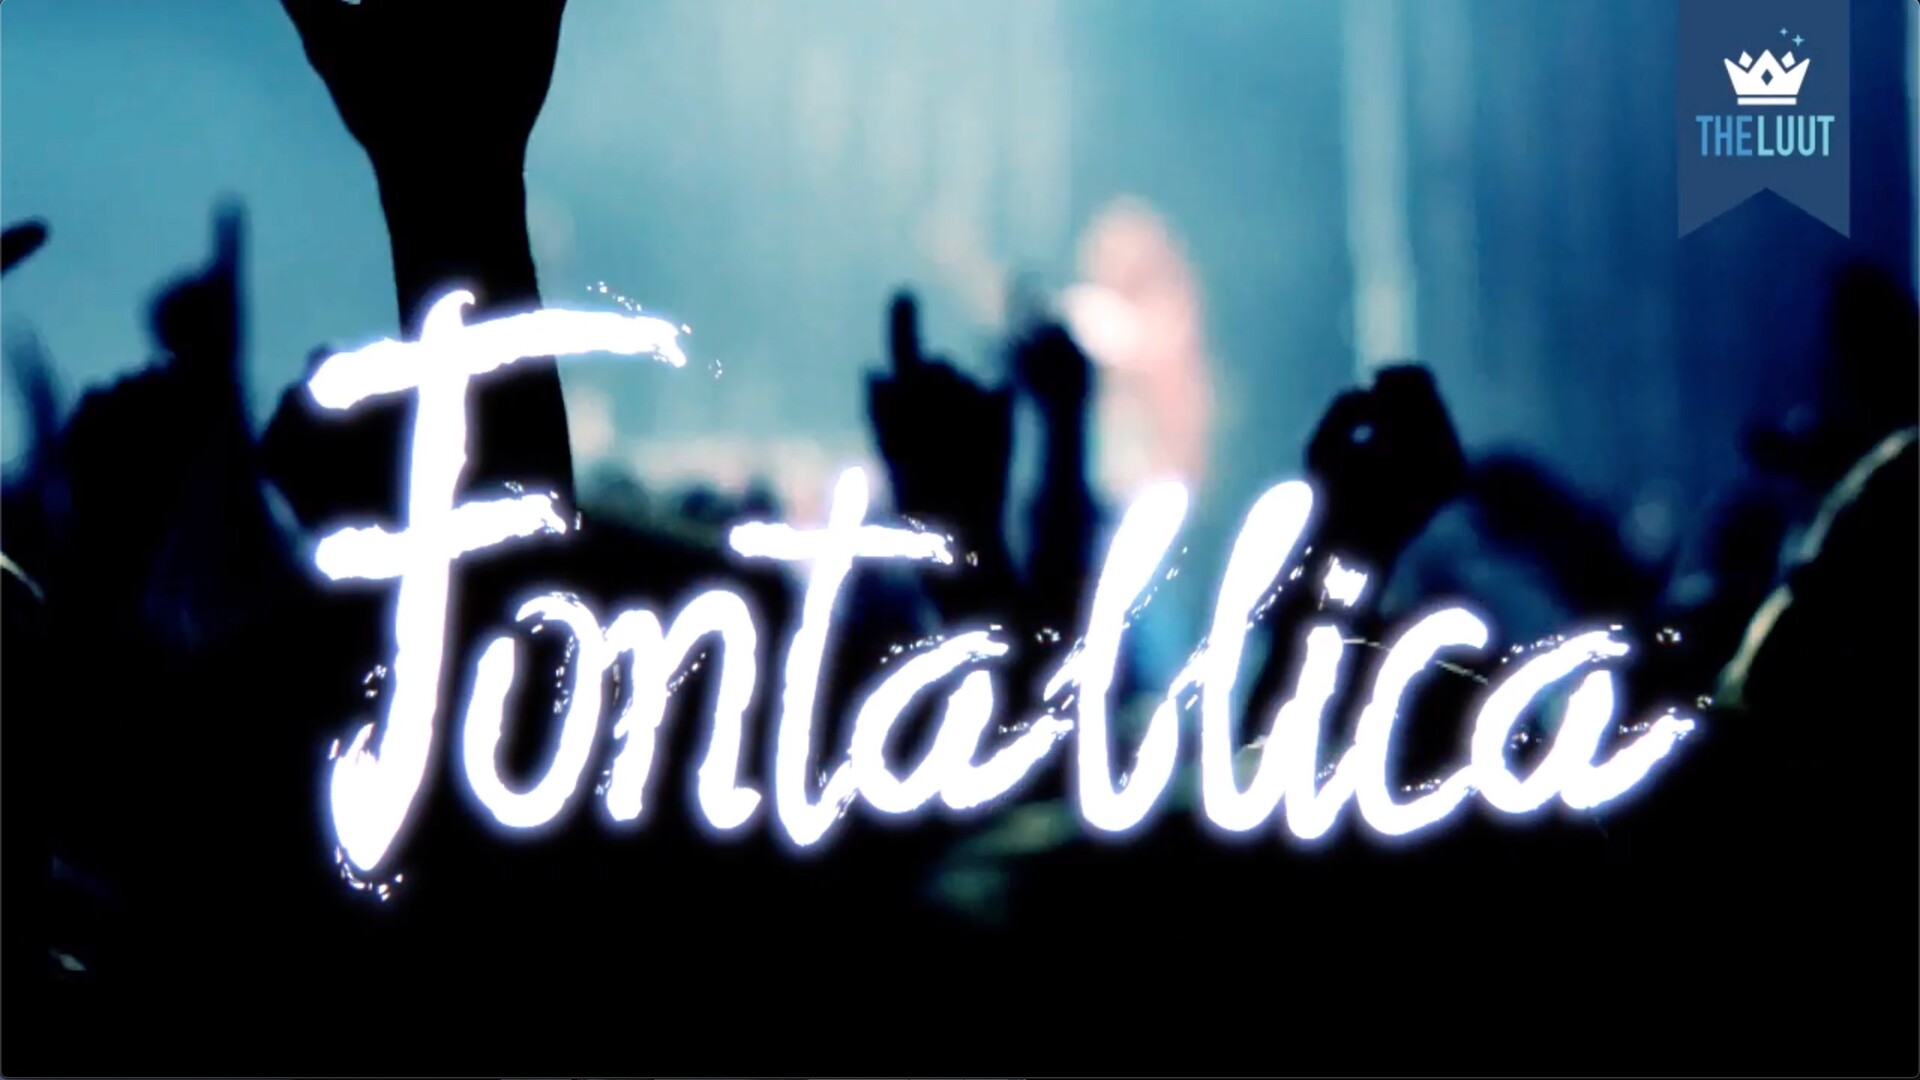 fcpx插件：自定义动画标题 The LUUT Fontallica